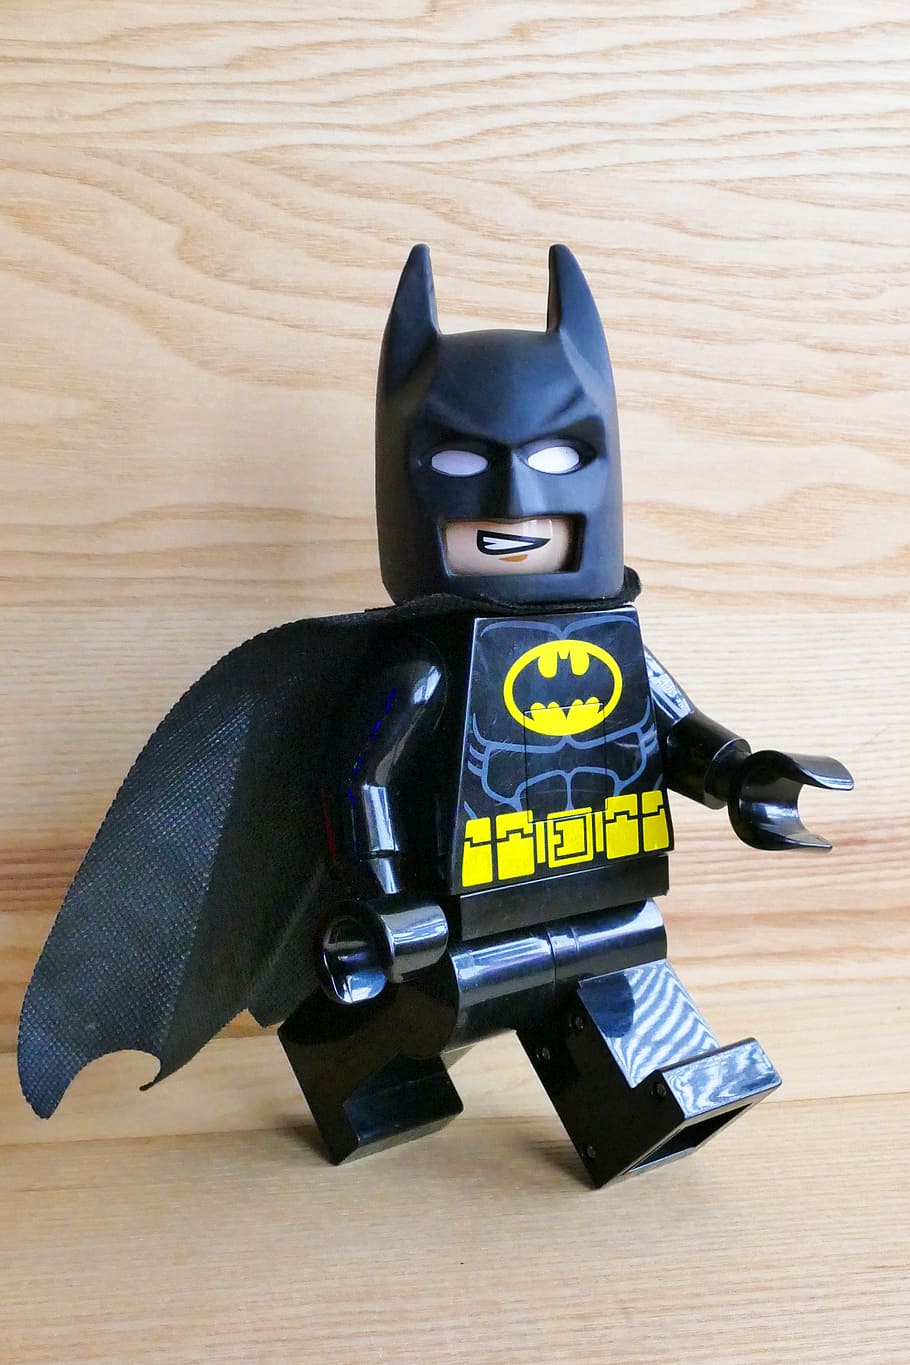 lego batman minifig, batman, lego, toys, kids, child, play, childhood, fun, activity